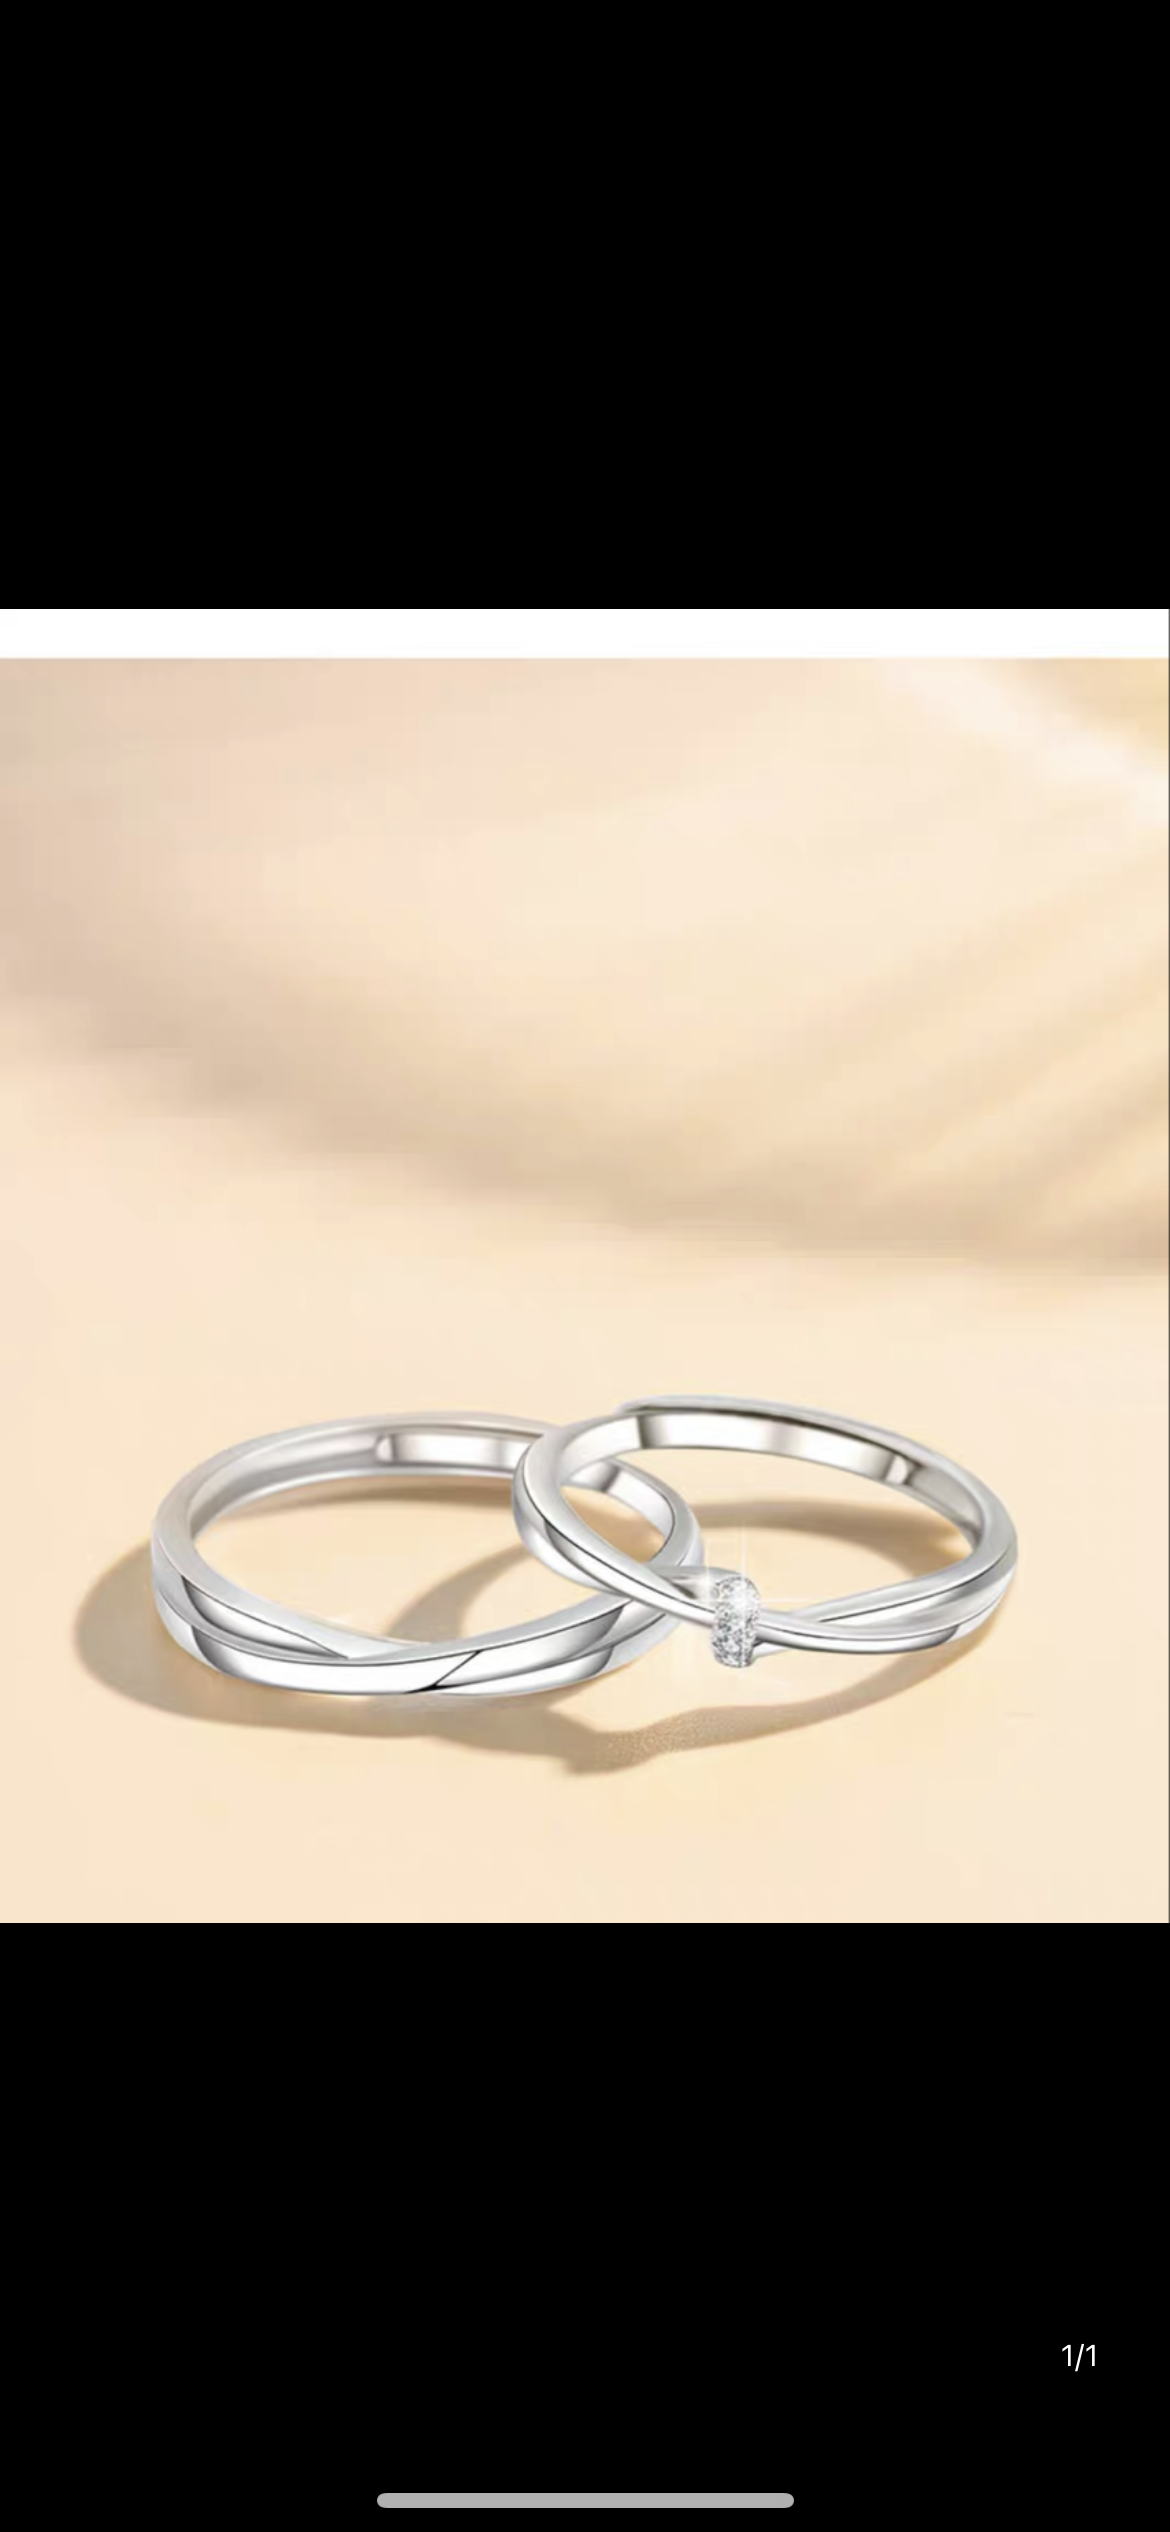 S999莫比乌斯环纯银对戒情侣款小众设计结婚戒指一对生日几年礼物